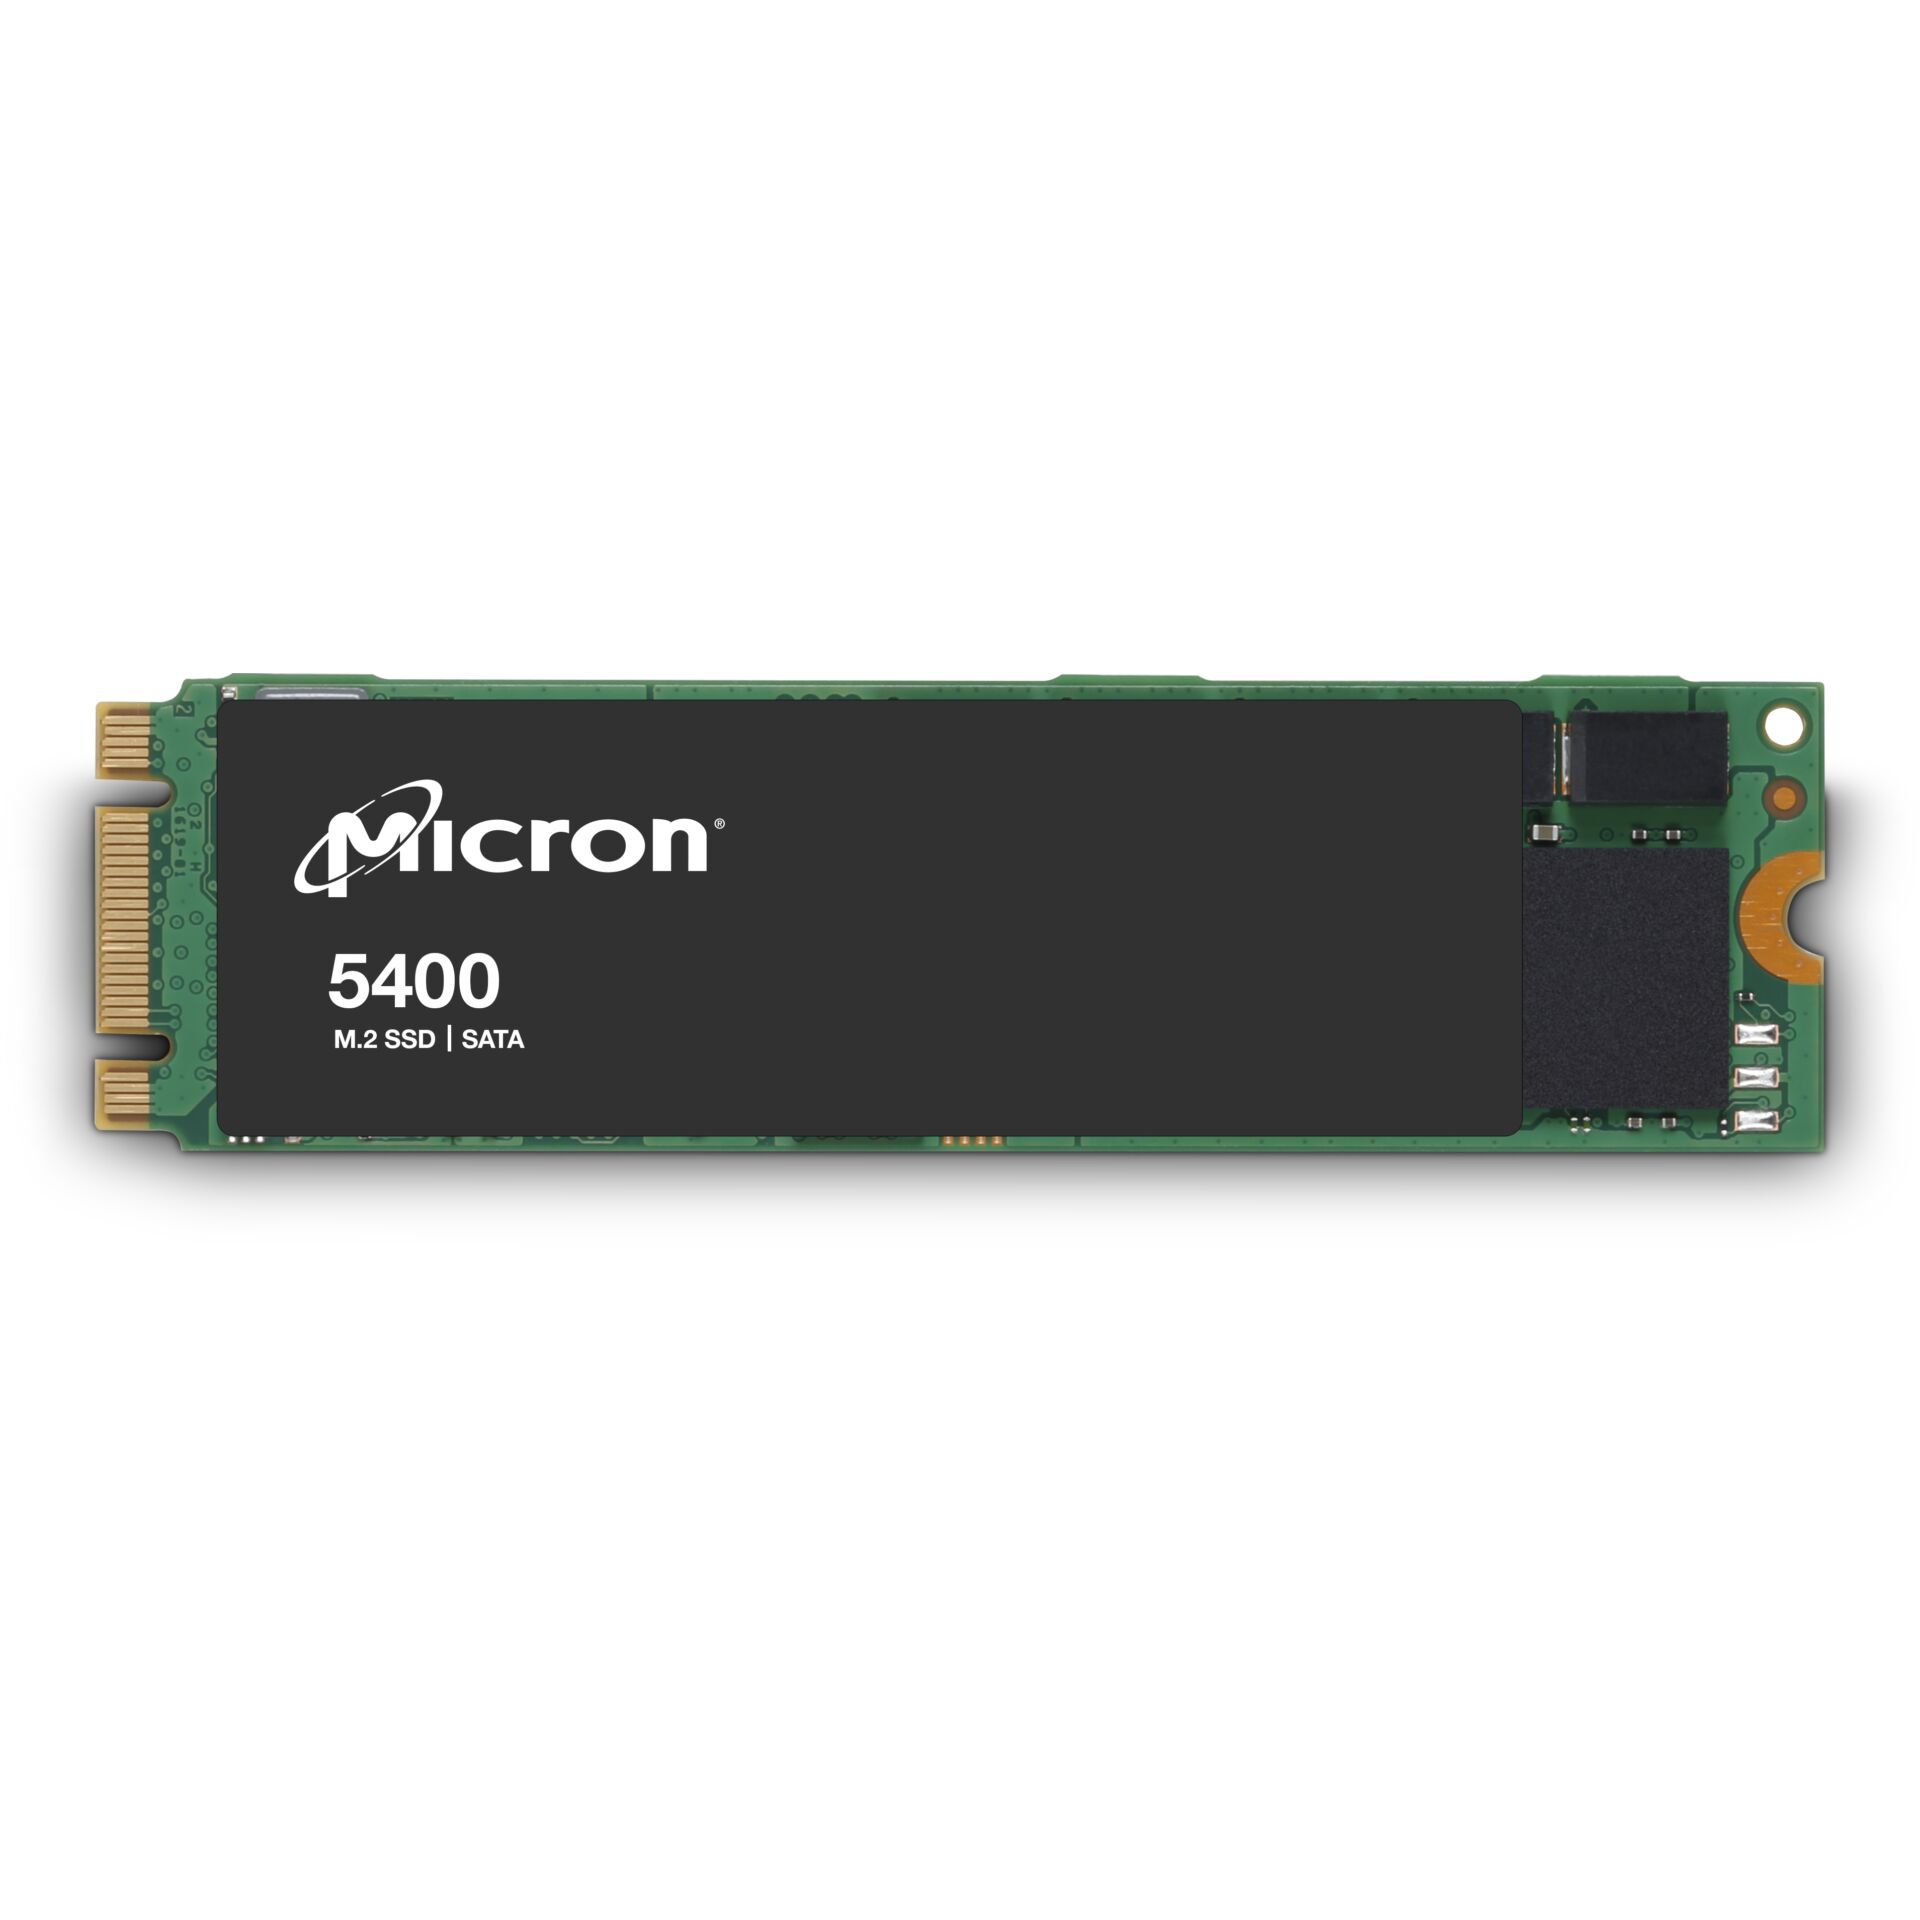 Micron 5400 PRO 480GB SATA M.2 SSD